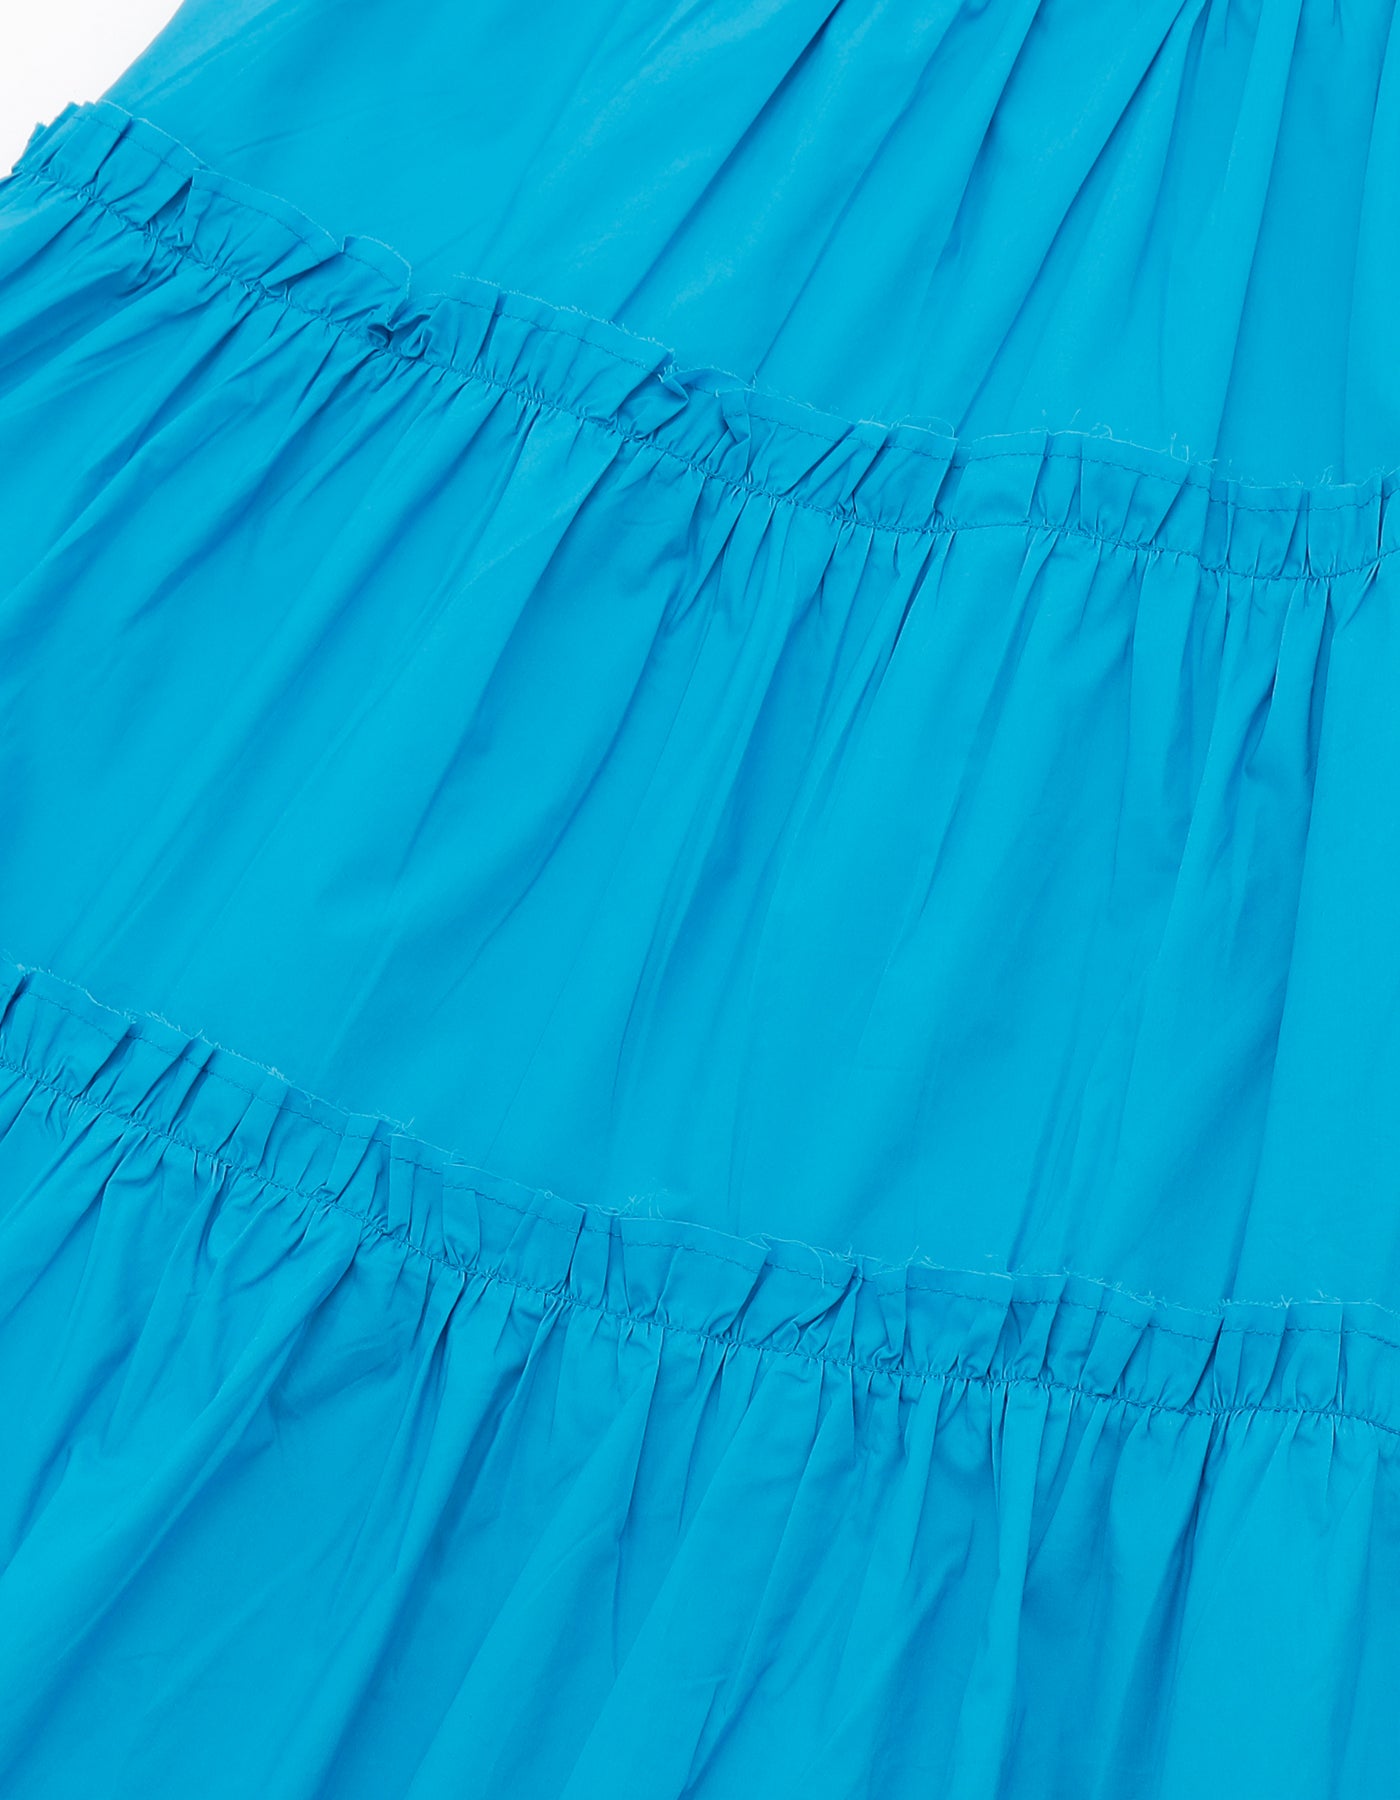 cami long dress  / BLUE